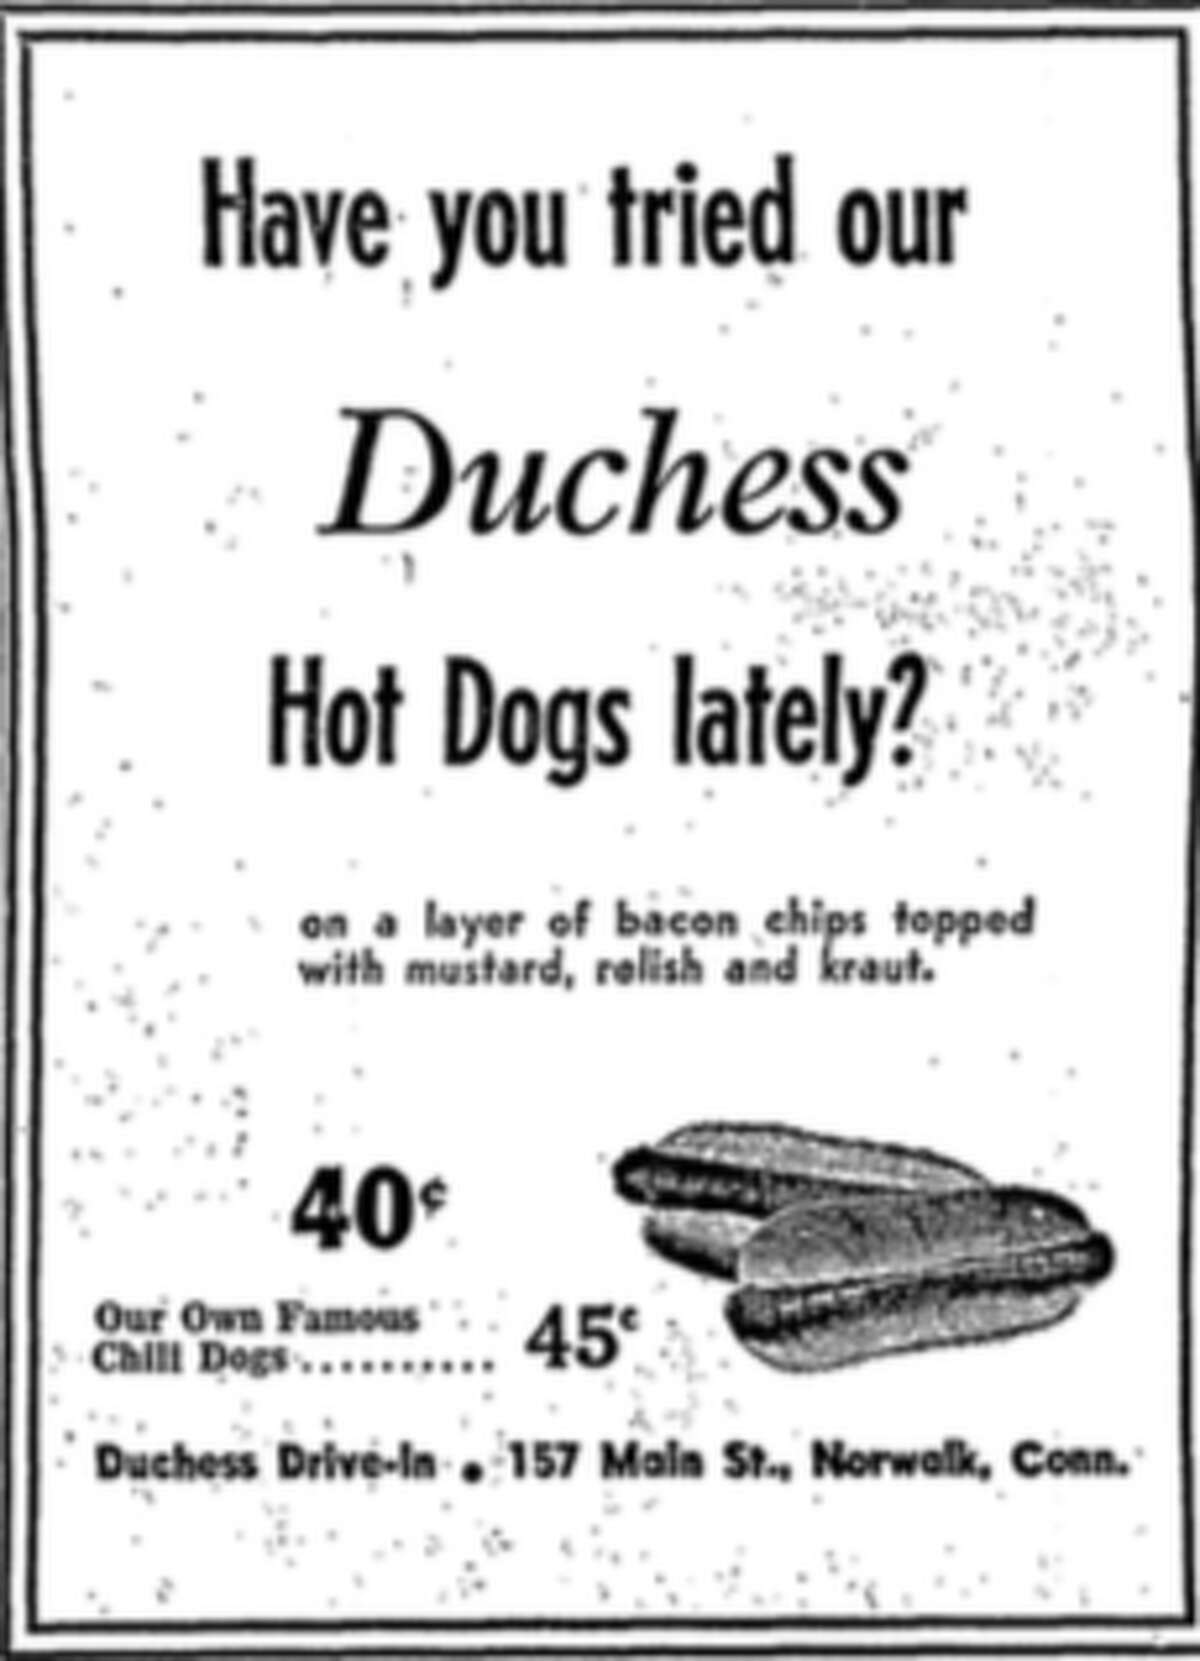 Hot Dog - Duchess